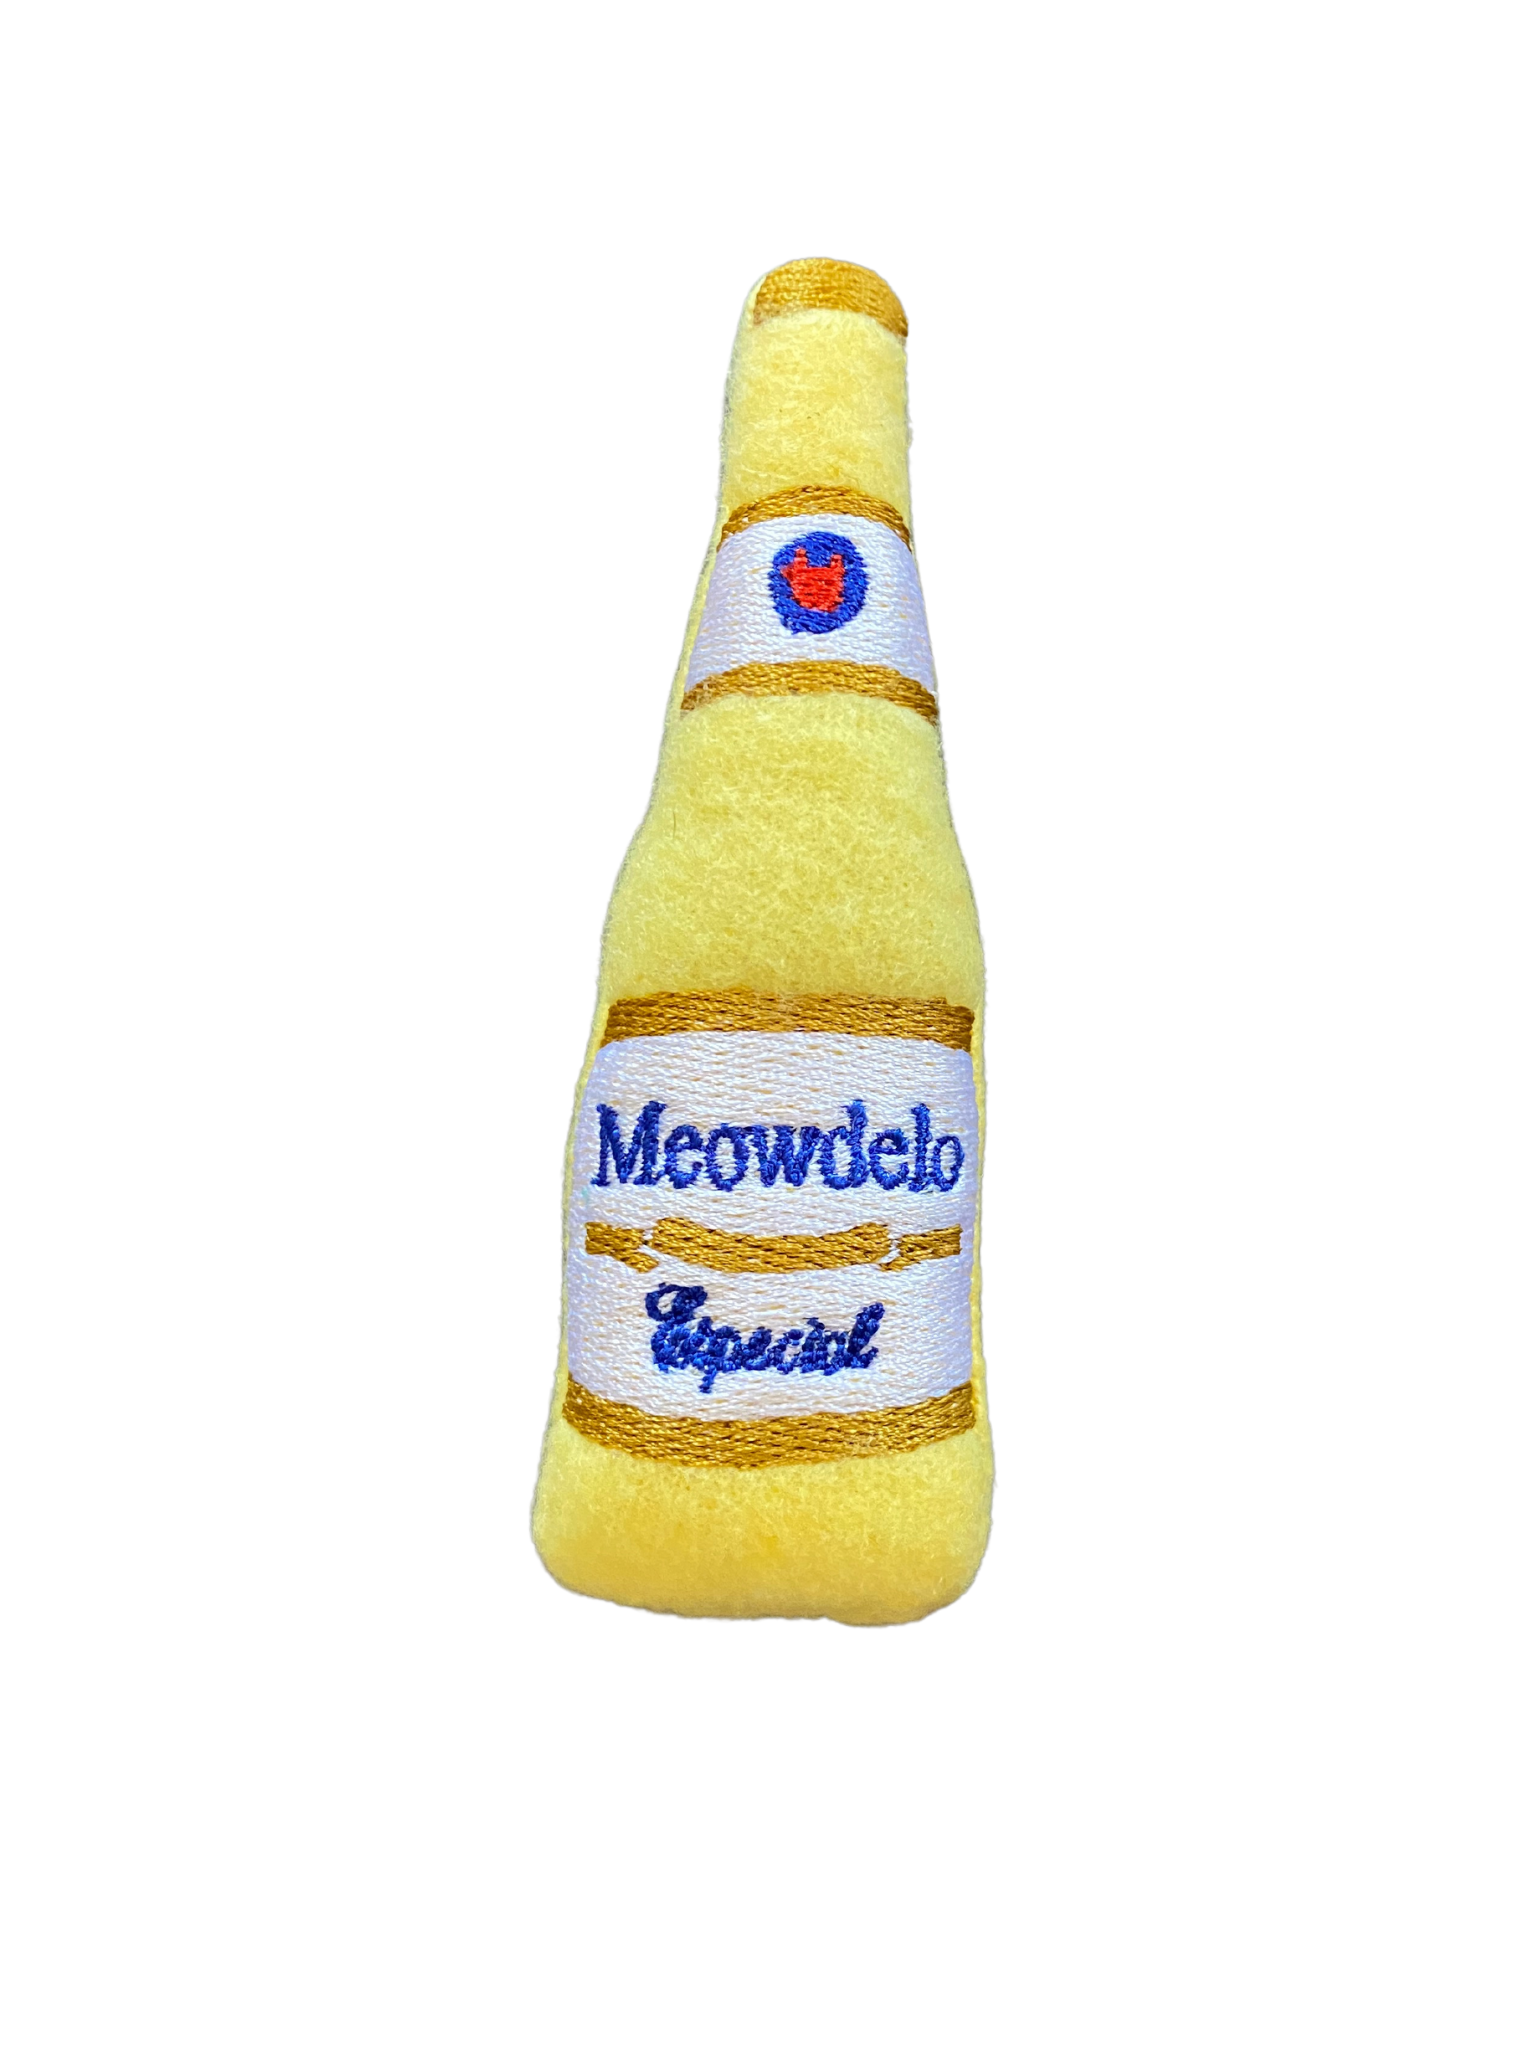 Meowdelo Modelo Beer Cat Toy - Catnip Toy